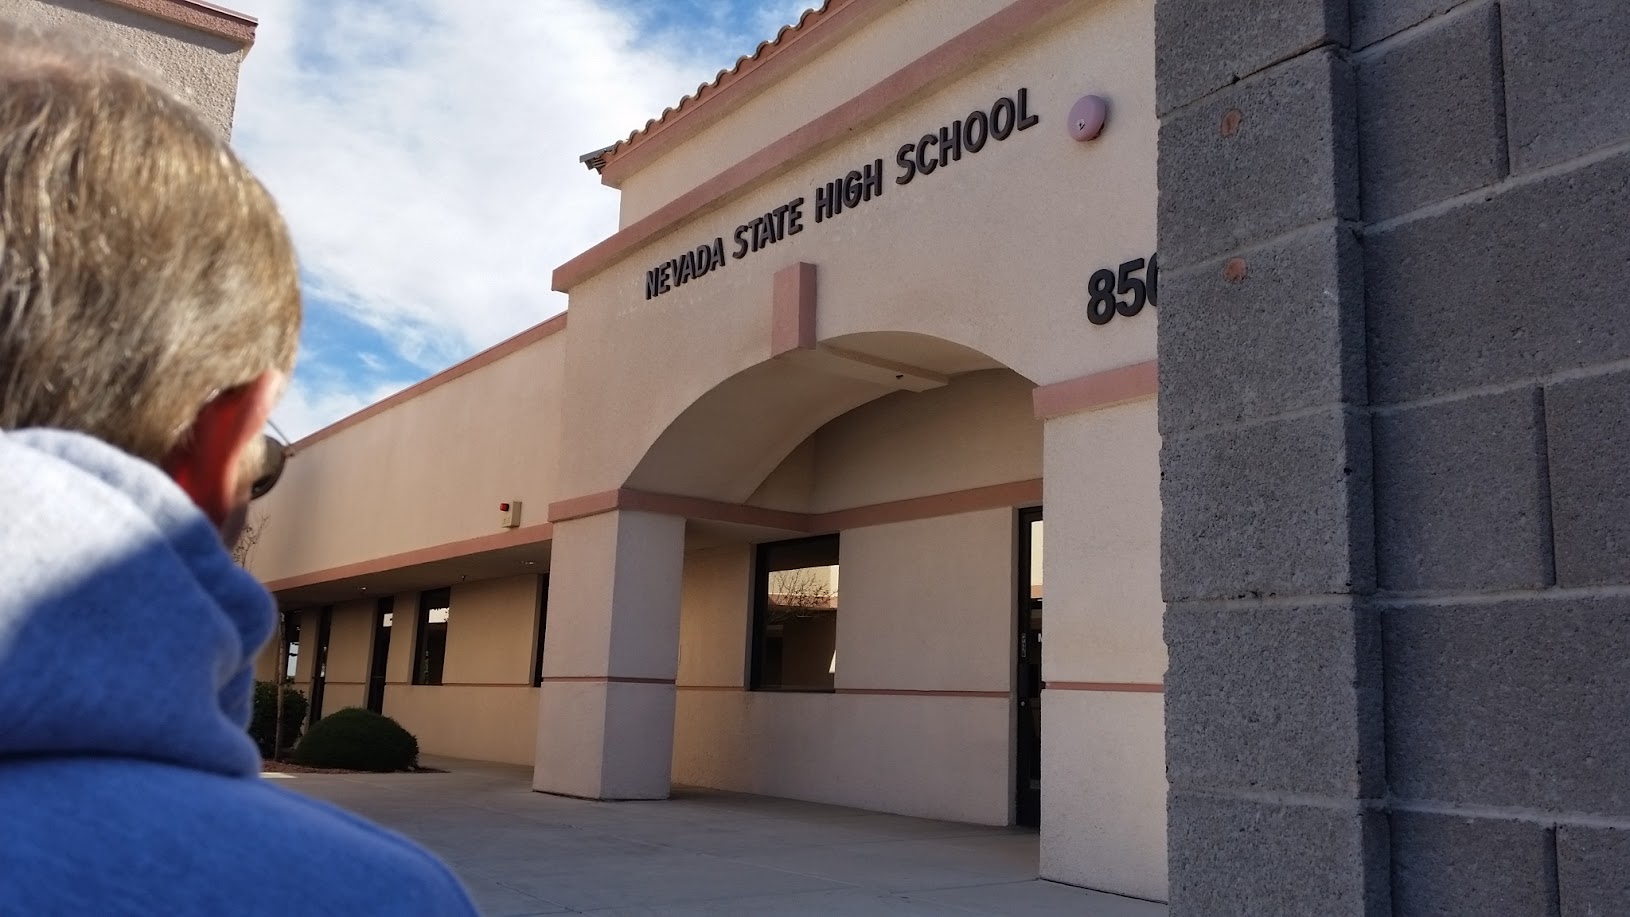 Nevada State High School - Las Vegas: Summerlin